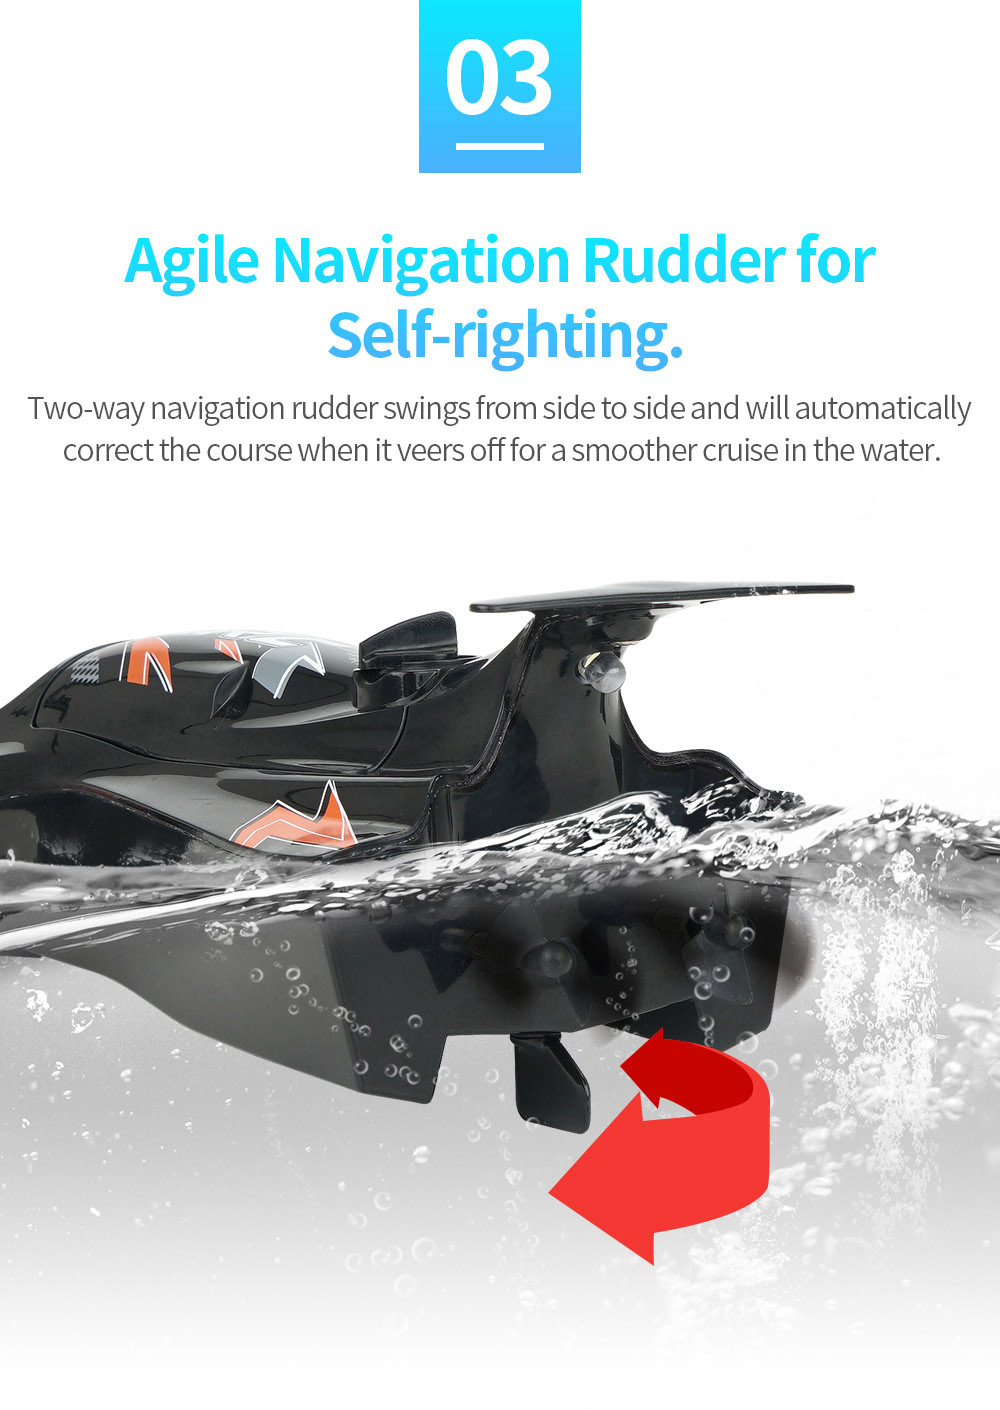 JJRC S6 2.4G Electric RC Boat Vehicle Model Agile Navigation Rudder for Self-righting.